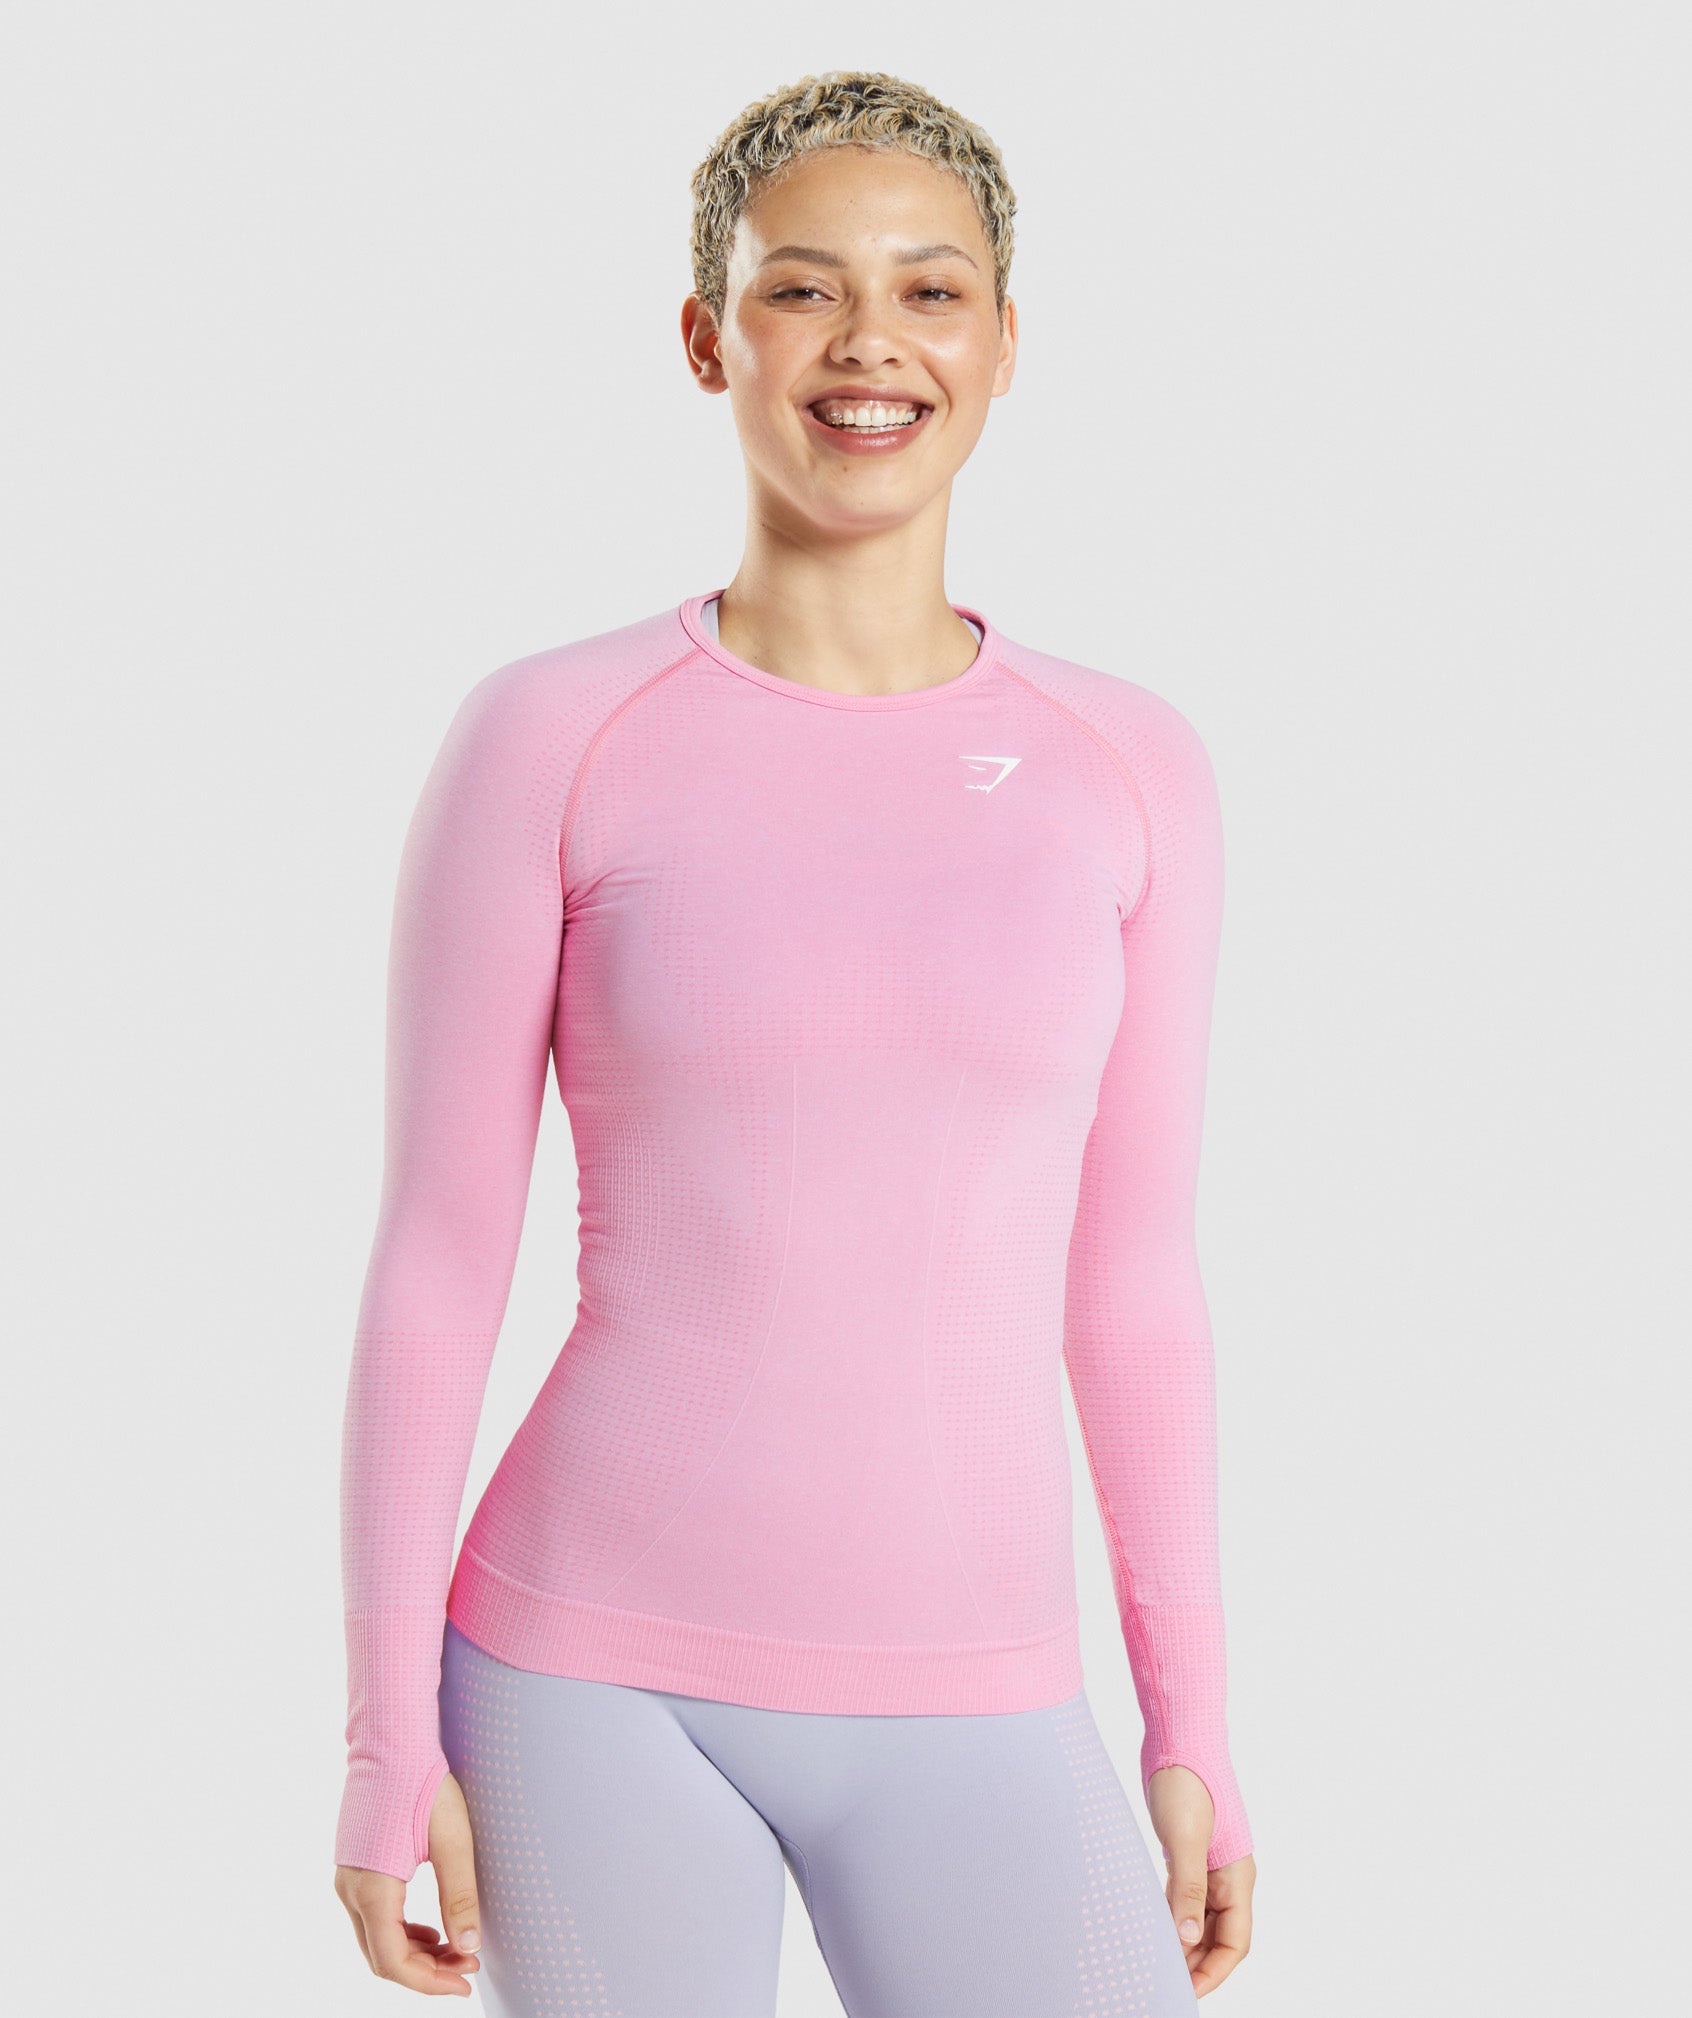 Gymshark Seamless Airflow Gray & Pink Compression Athletic Shirt womens  medium 